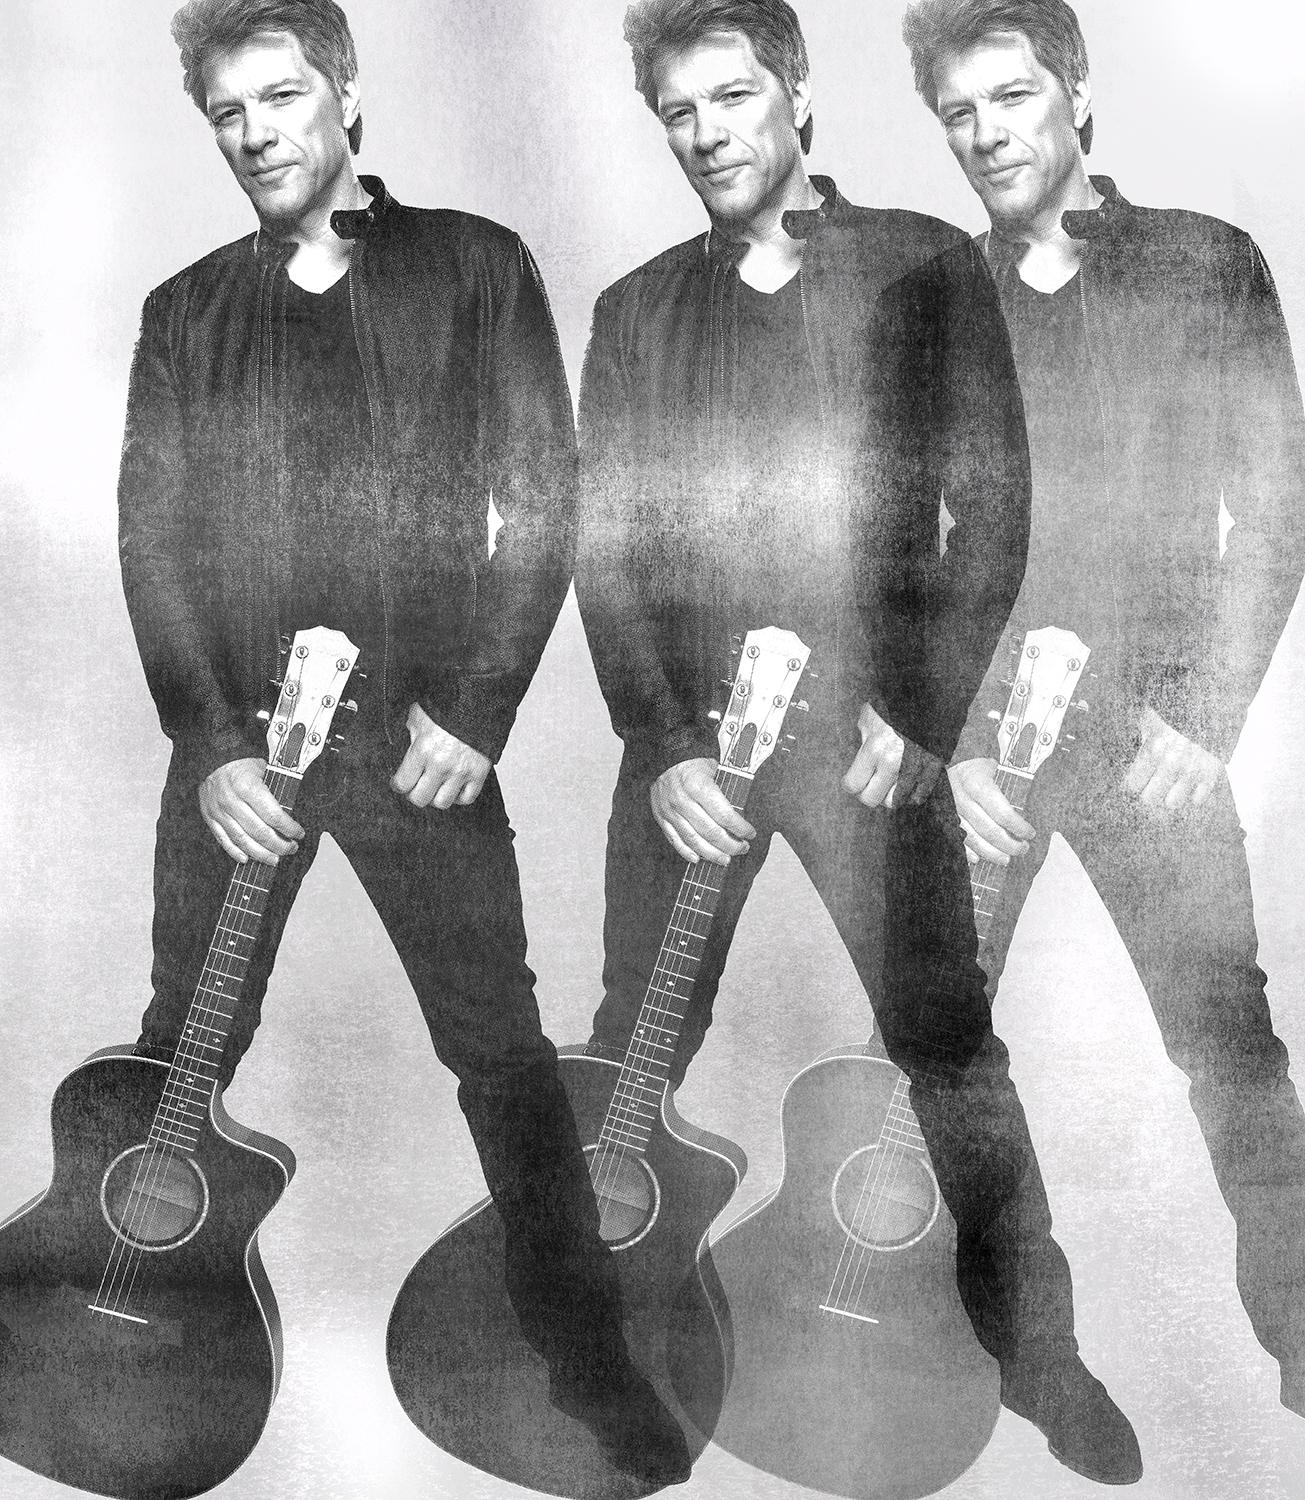 Scott McDermott Black and White Photograph - Jon Bon Jovi as Triple Elvis